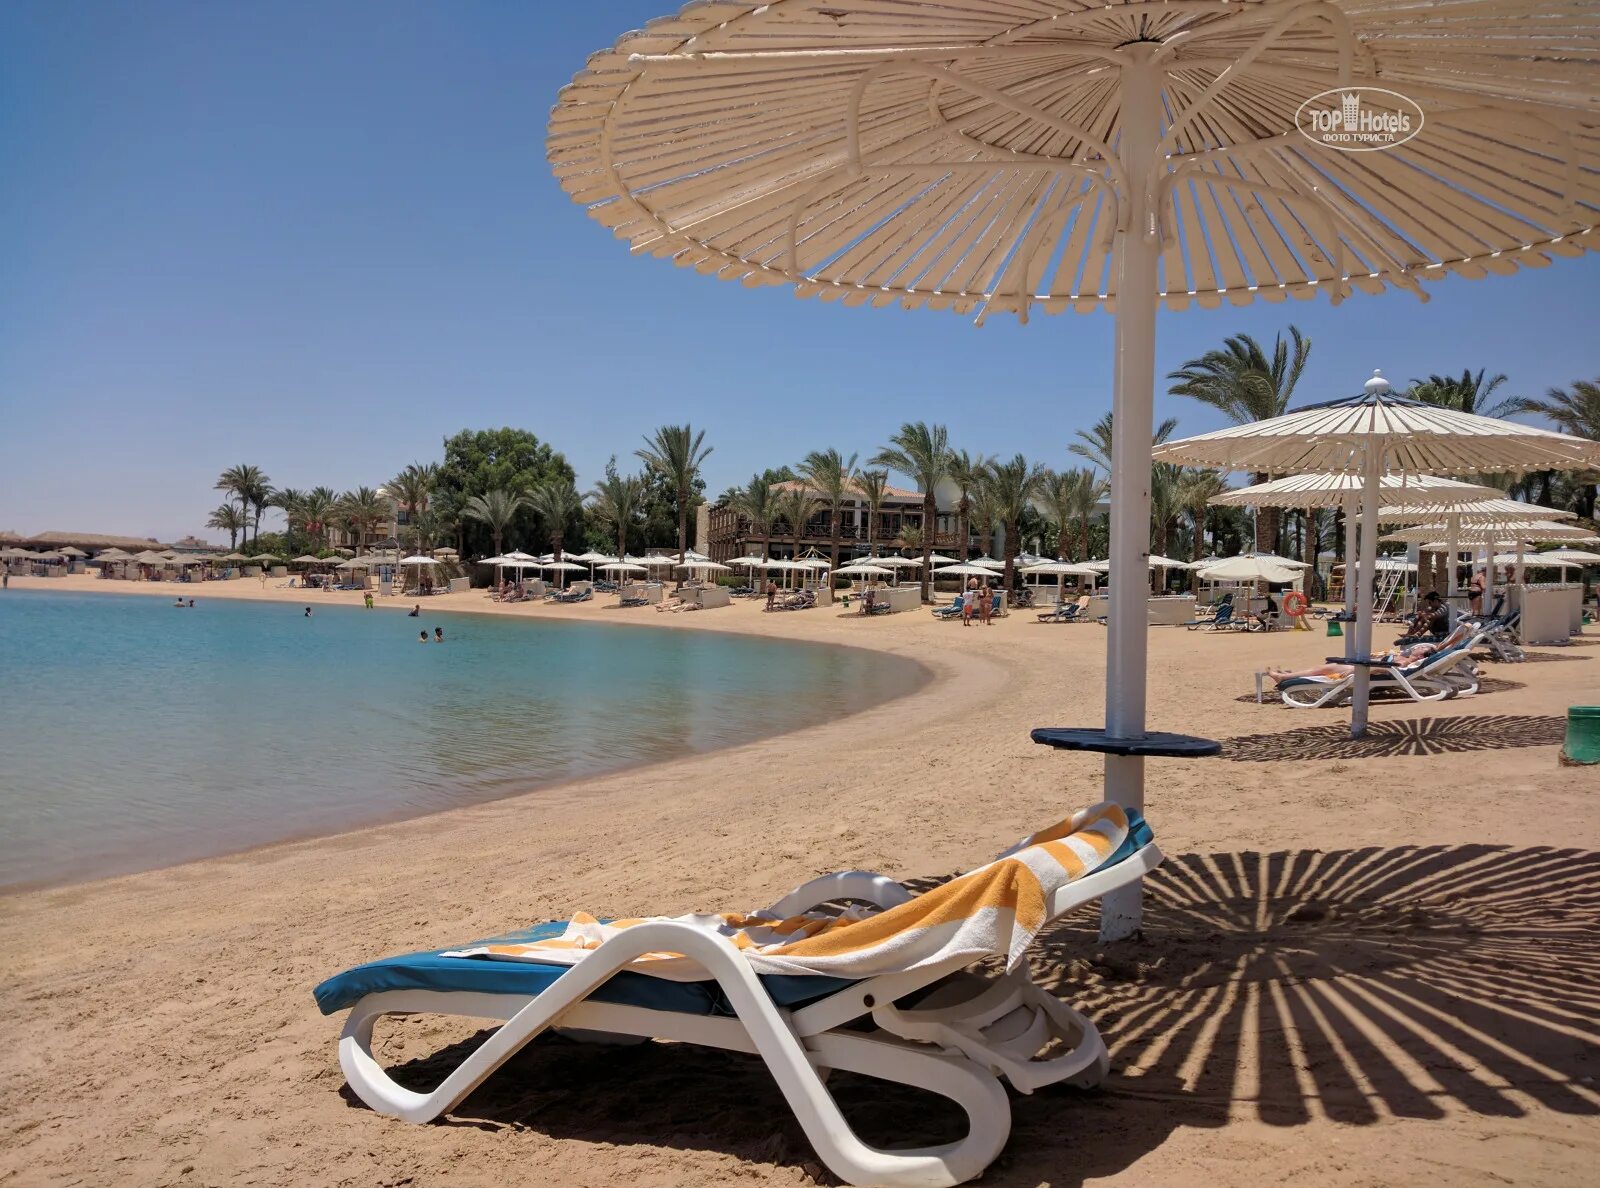 Хургада hurghada swiss inn hurghada. Swiss Inn Resort Hurghada 5. Свисс ИНН Резорт Хургада 5.